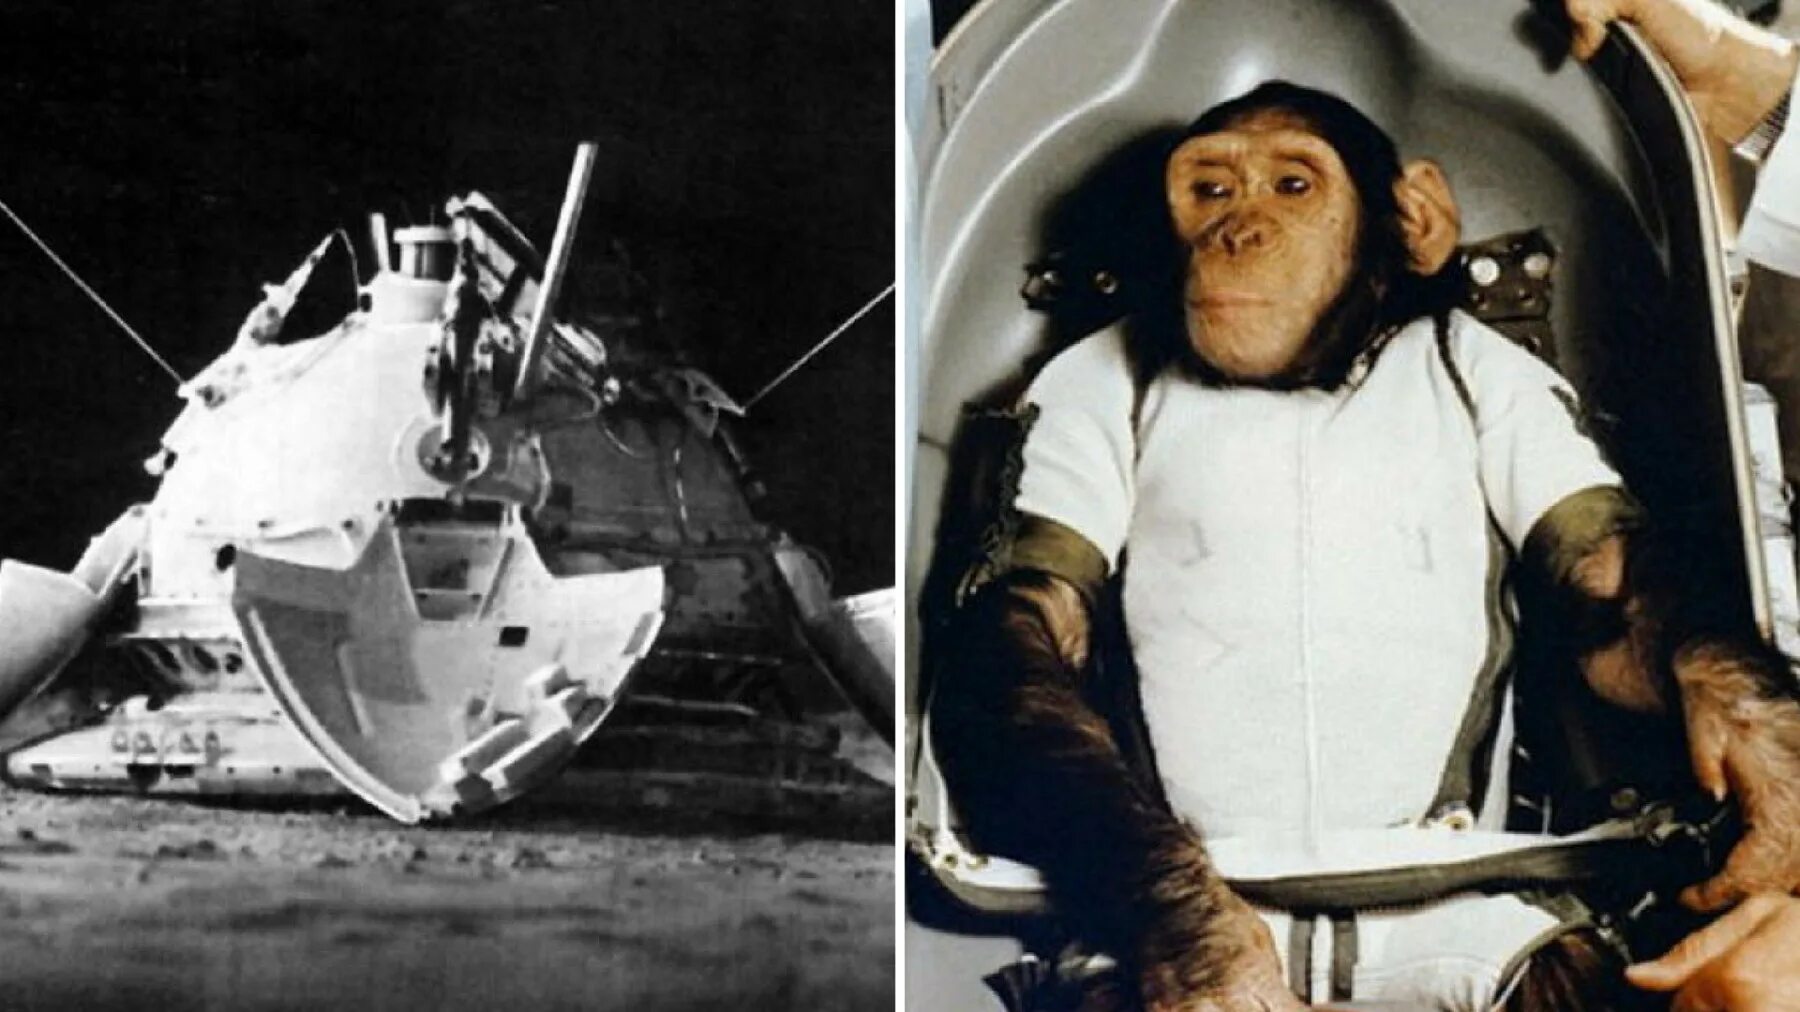 Обезьяна полетела в космос. Обезьяны в космосе 1959 Эйбл и Бейкер. Шимпанзе Хэм космонавт.